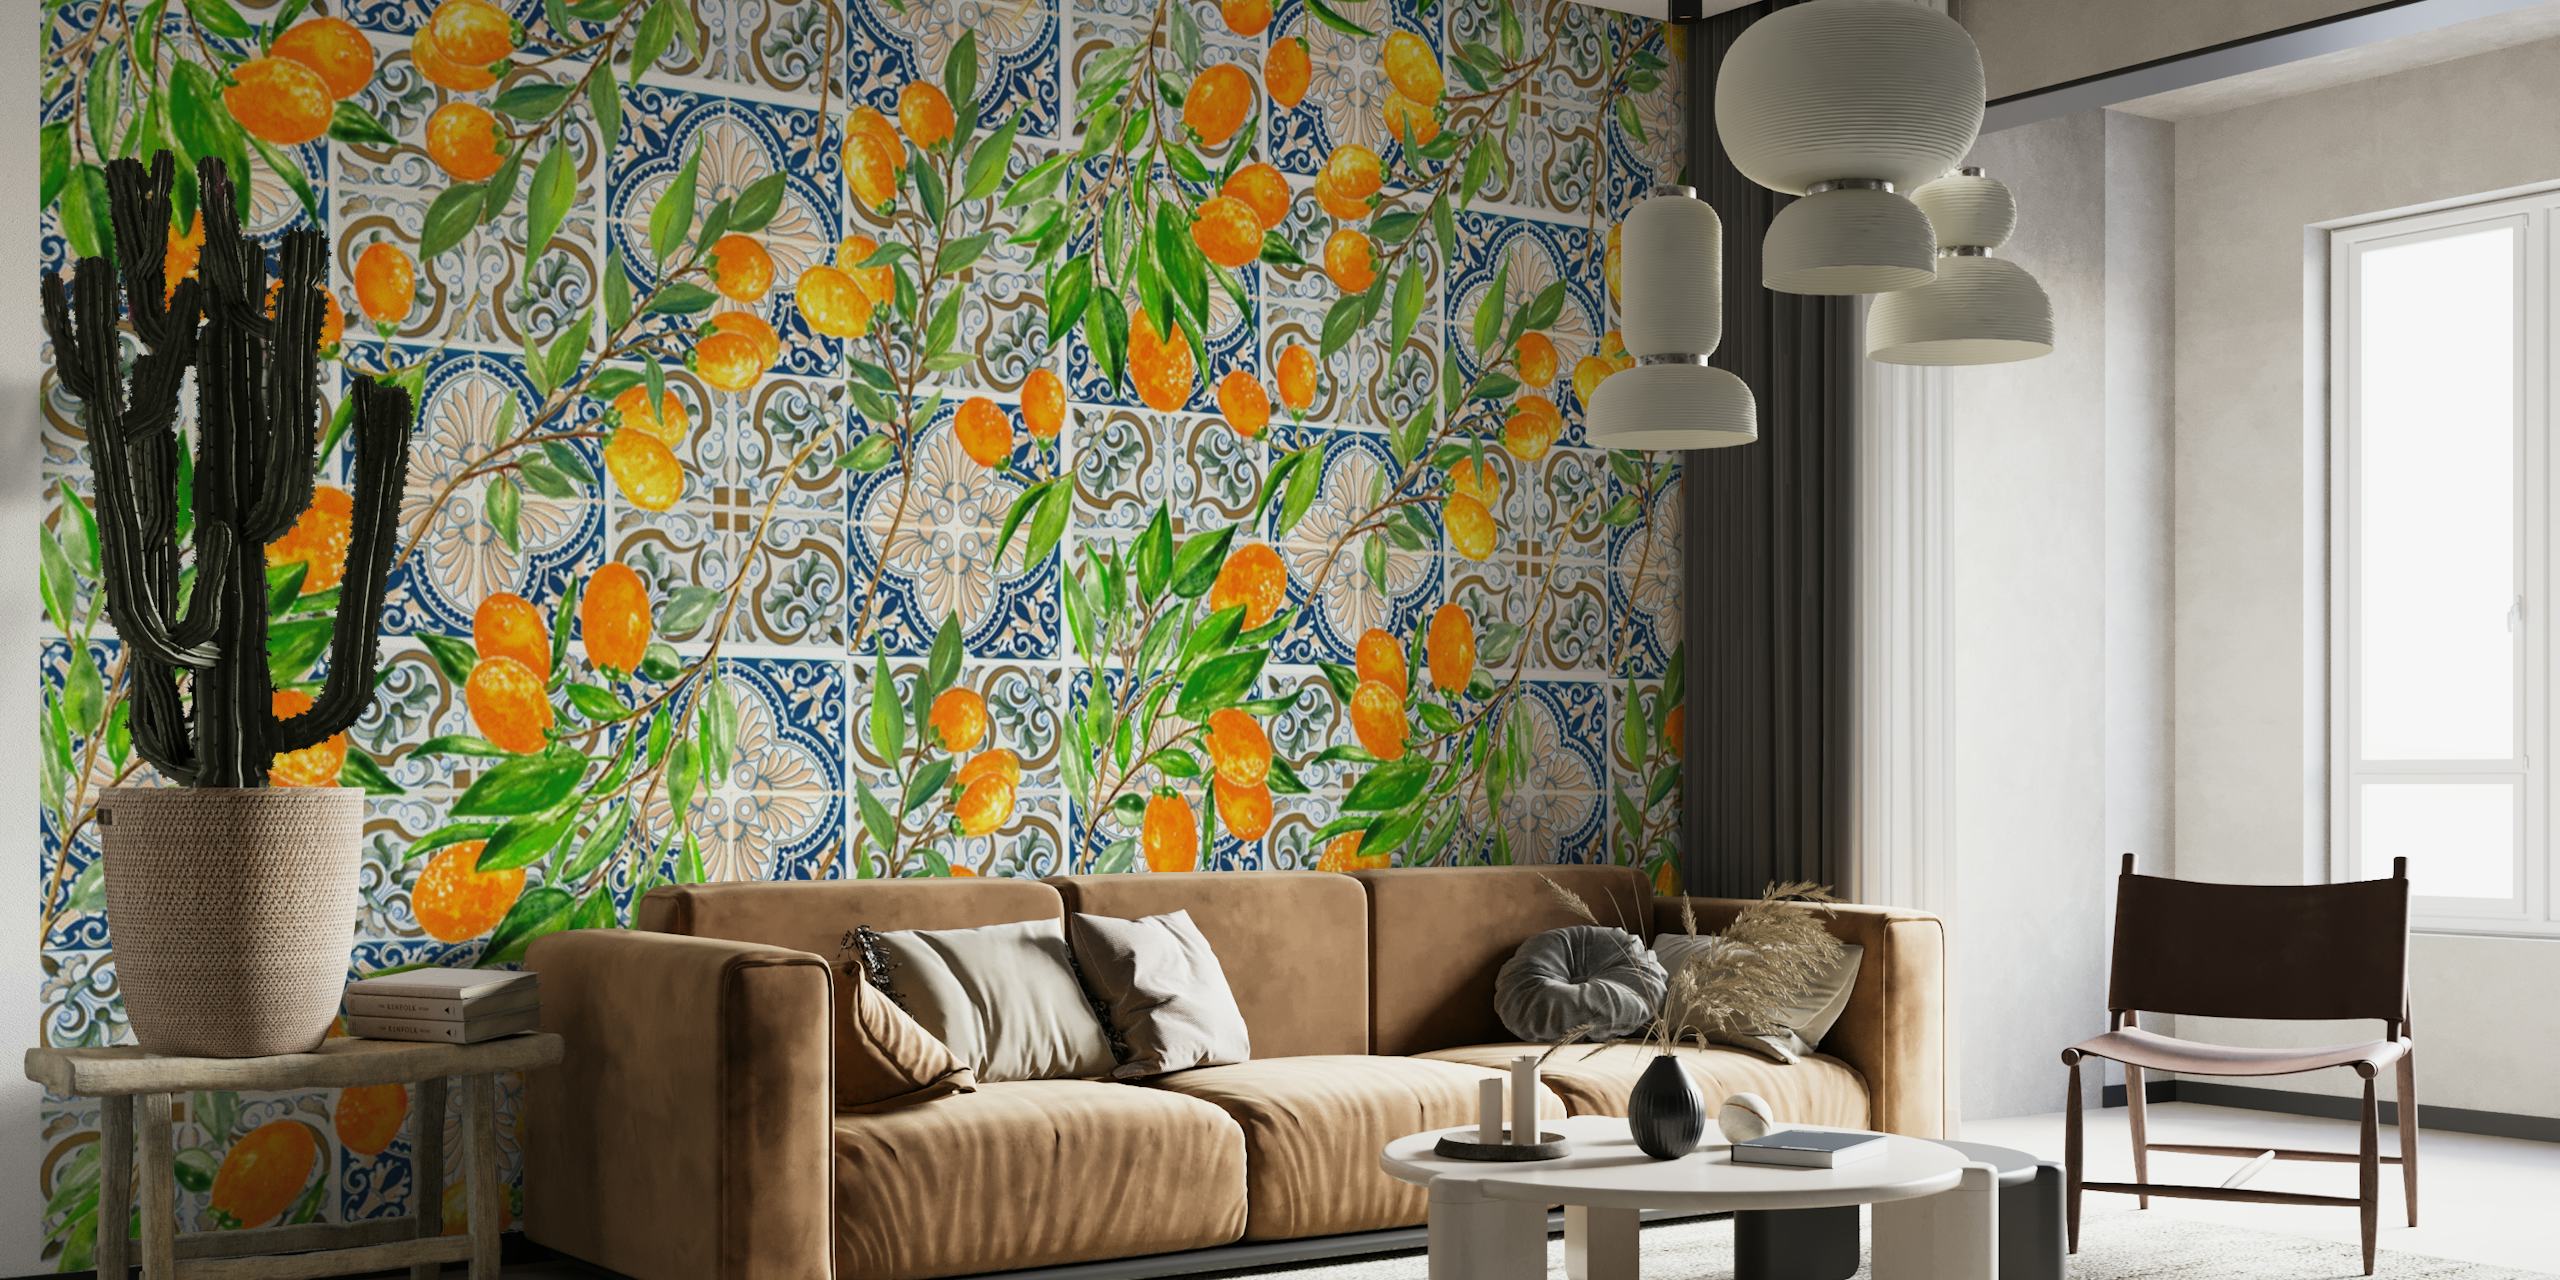 Mediterranean Cumquat Tiles papel pintado